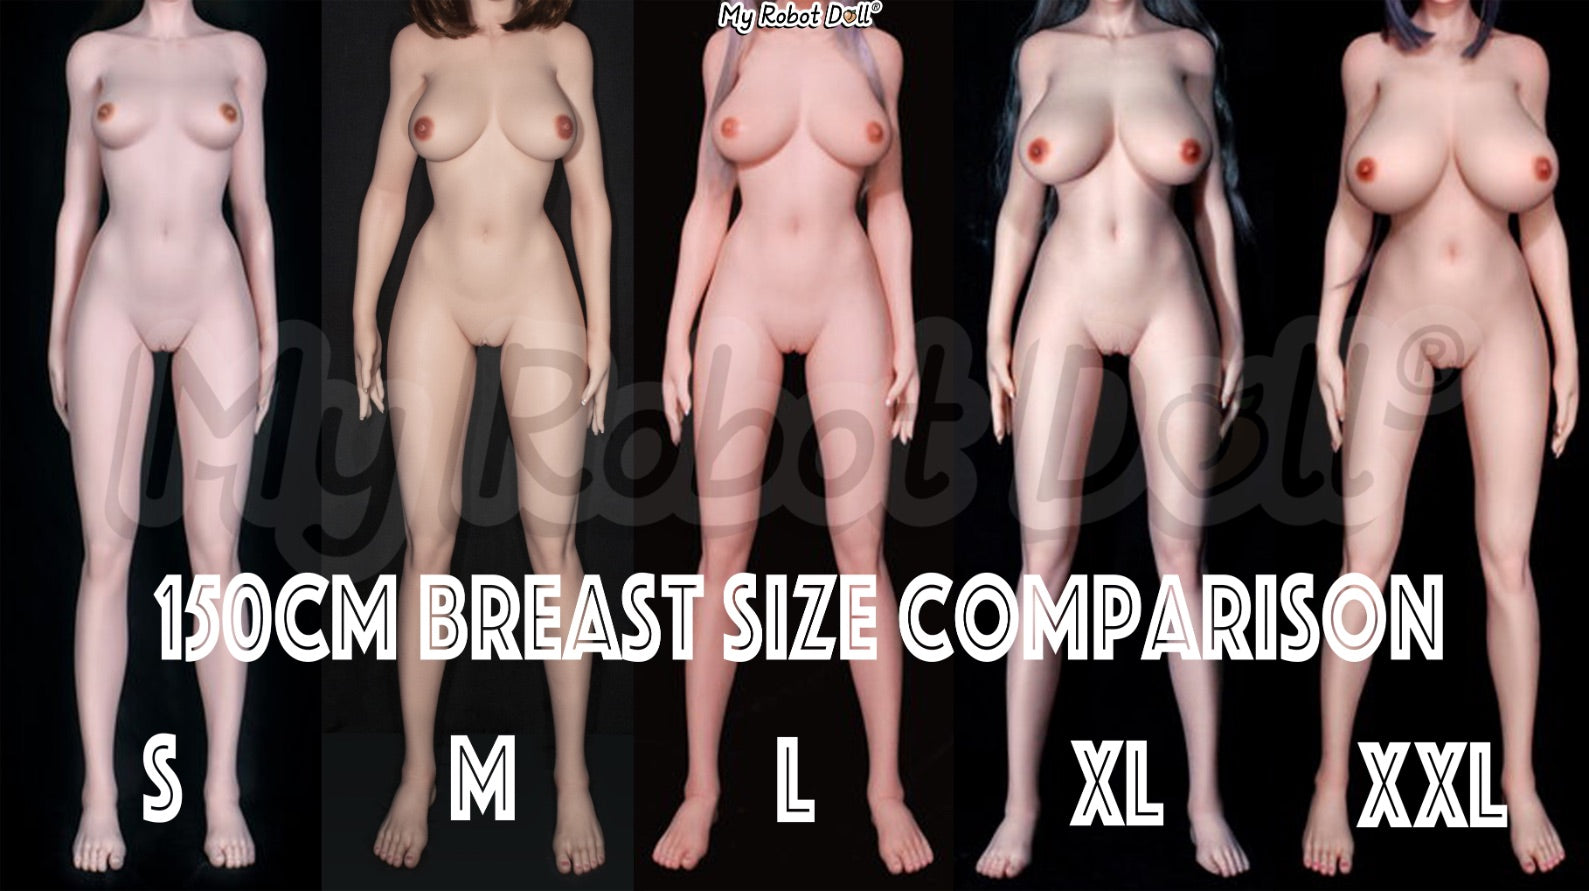 Elsa Babe 150cm breast comparison